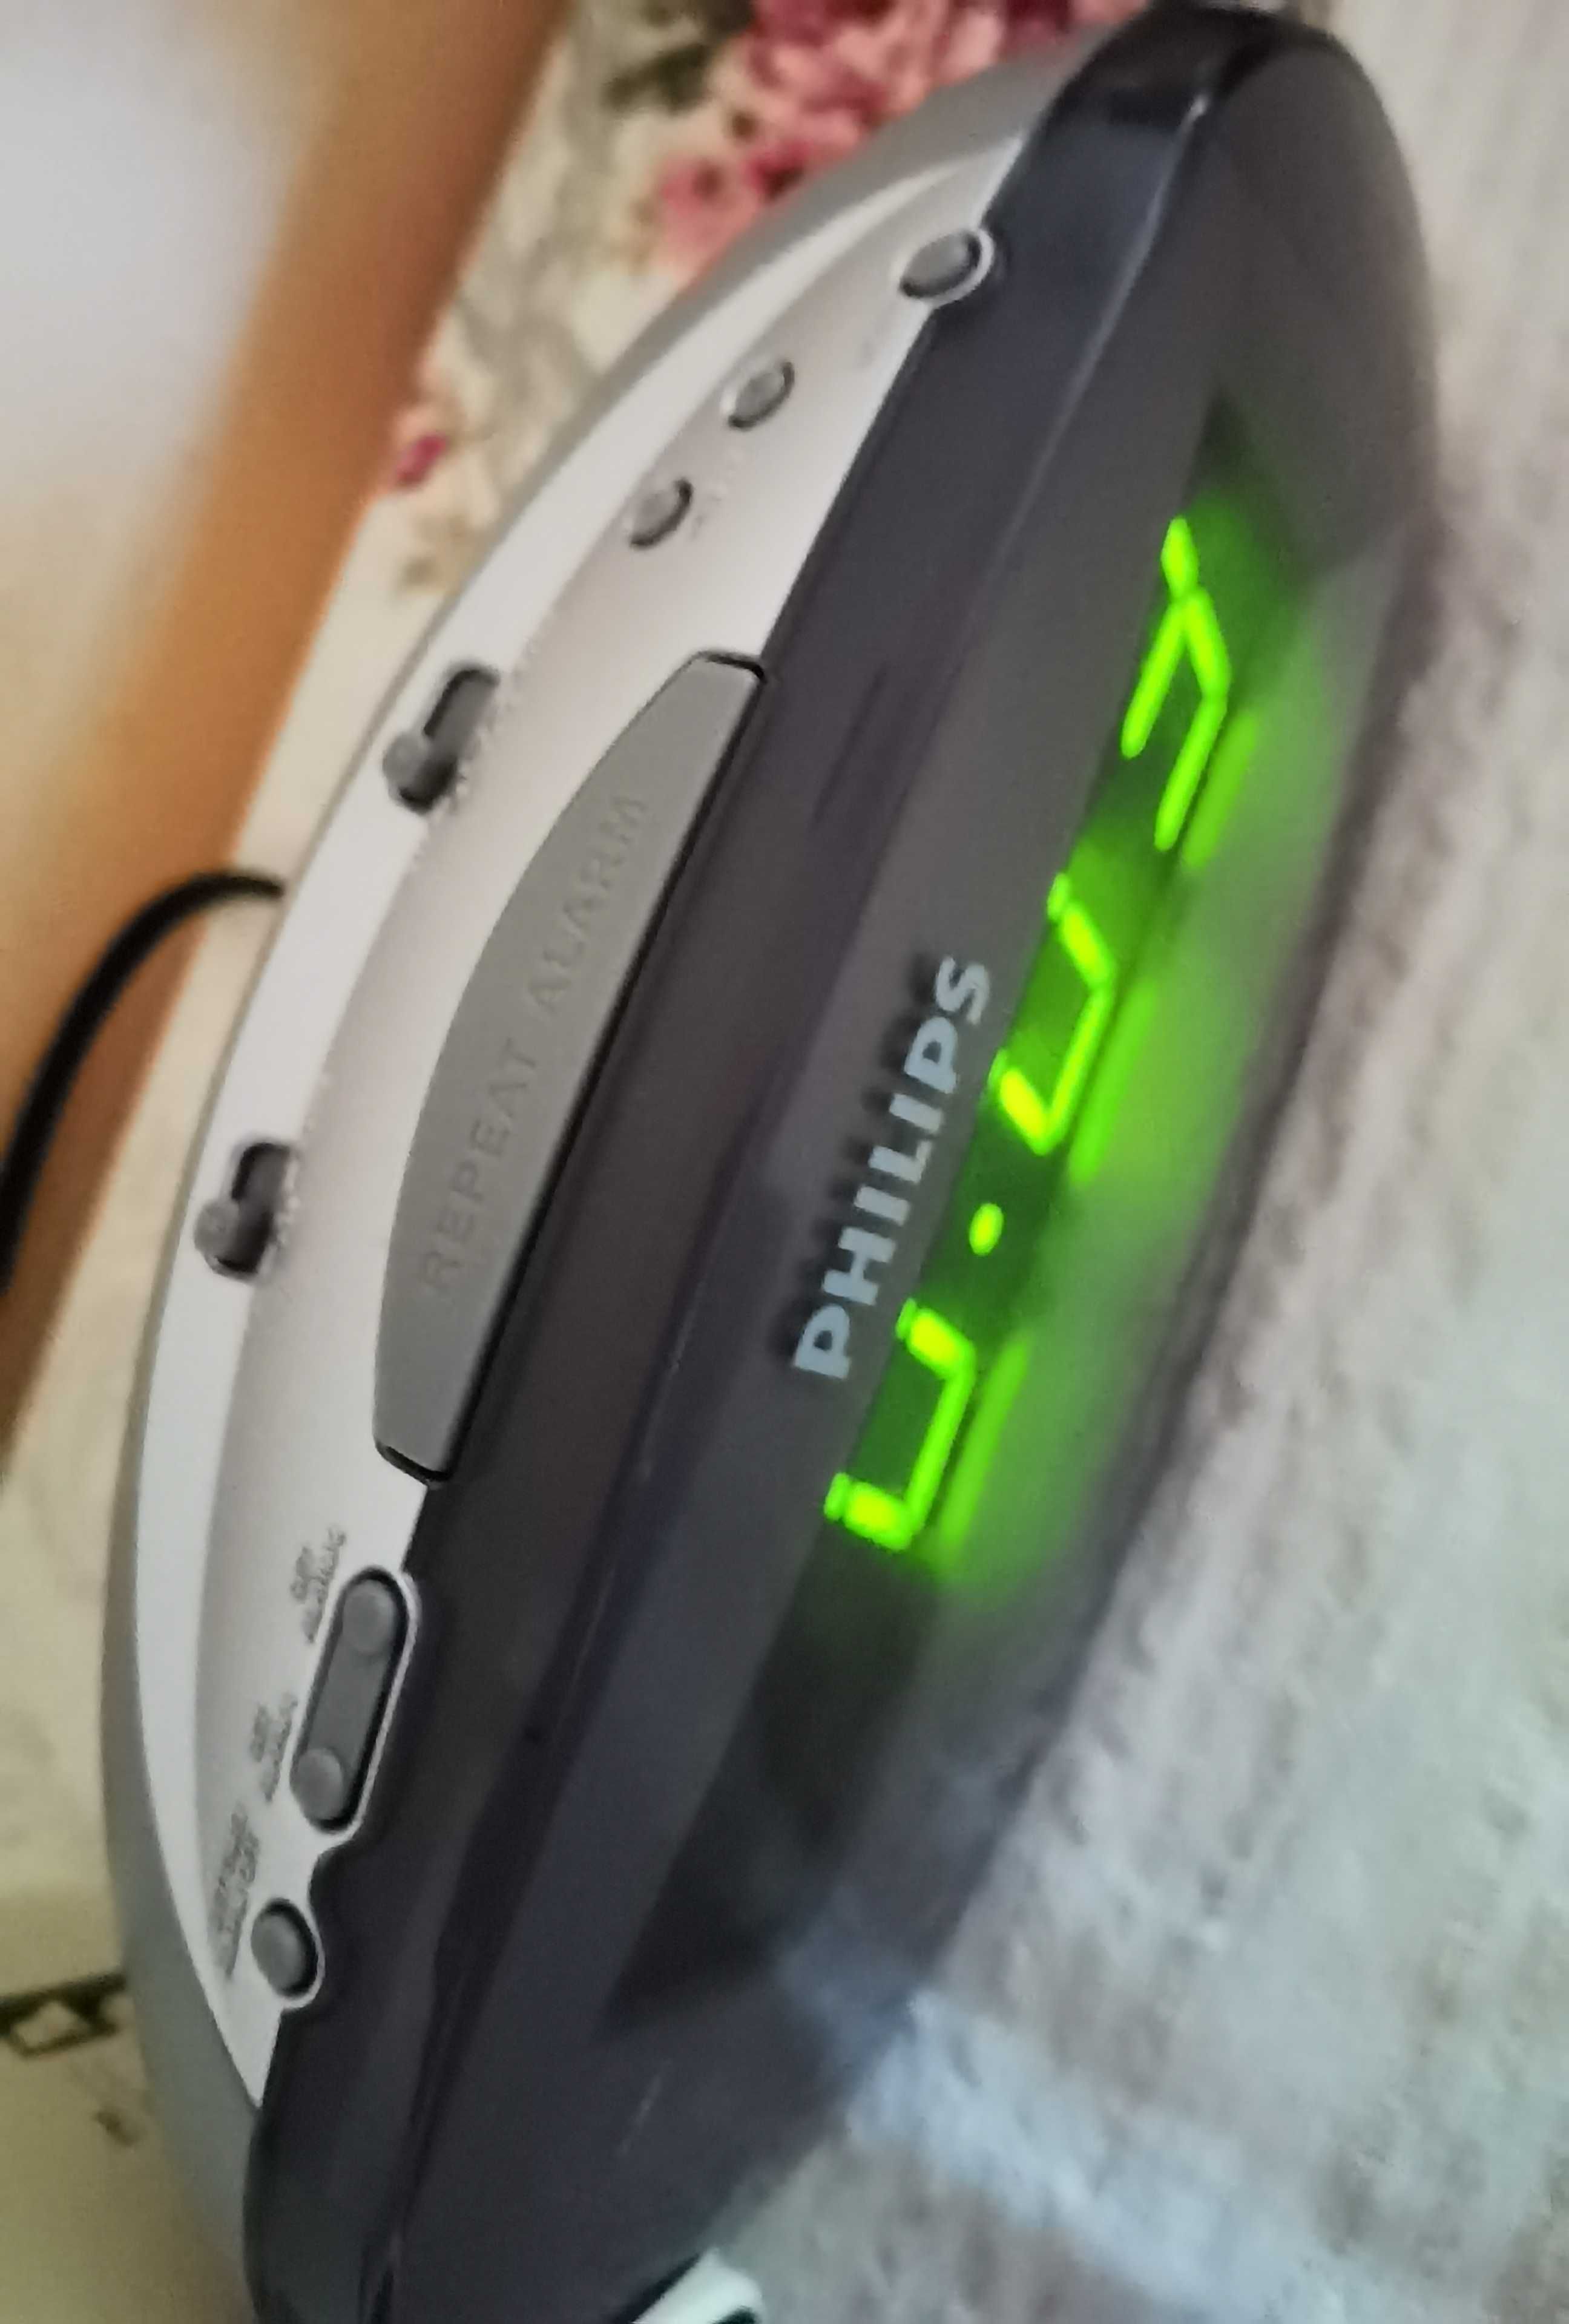 Radio cu ceas Sony, Philips